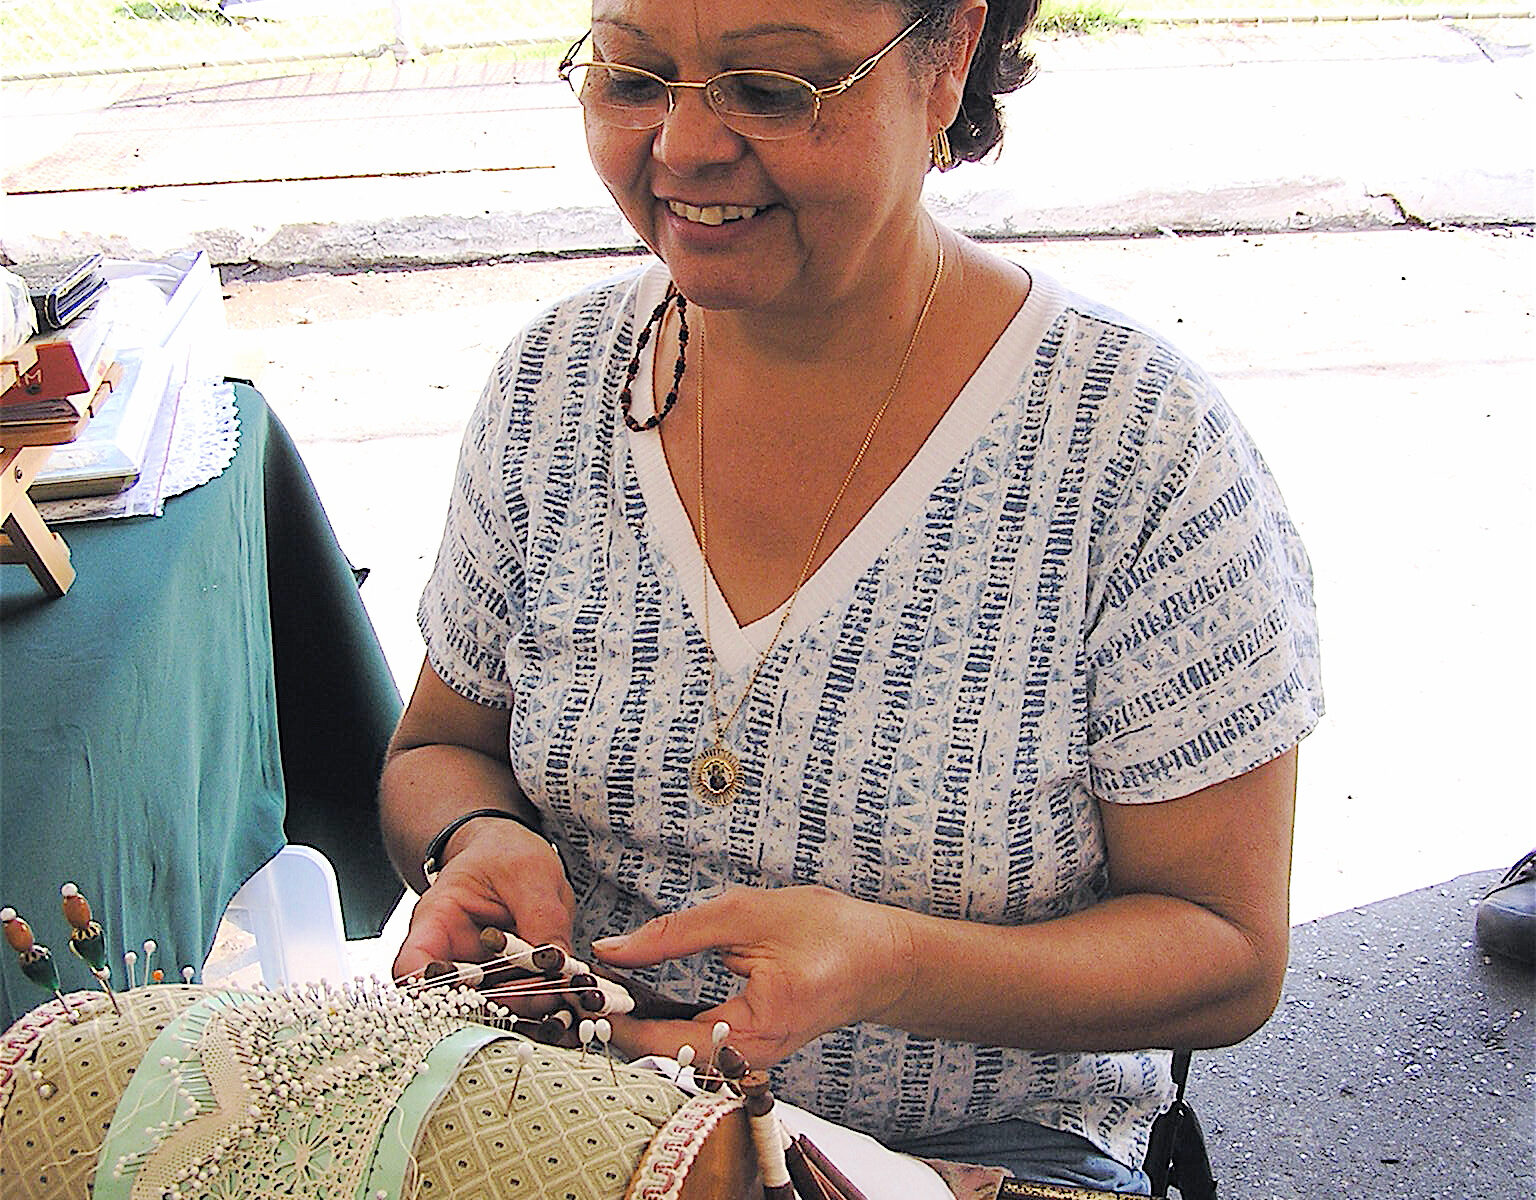 Olga Hernandez making lace at the Festival de Mundillo, Moca